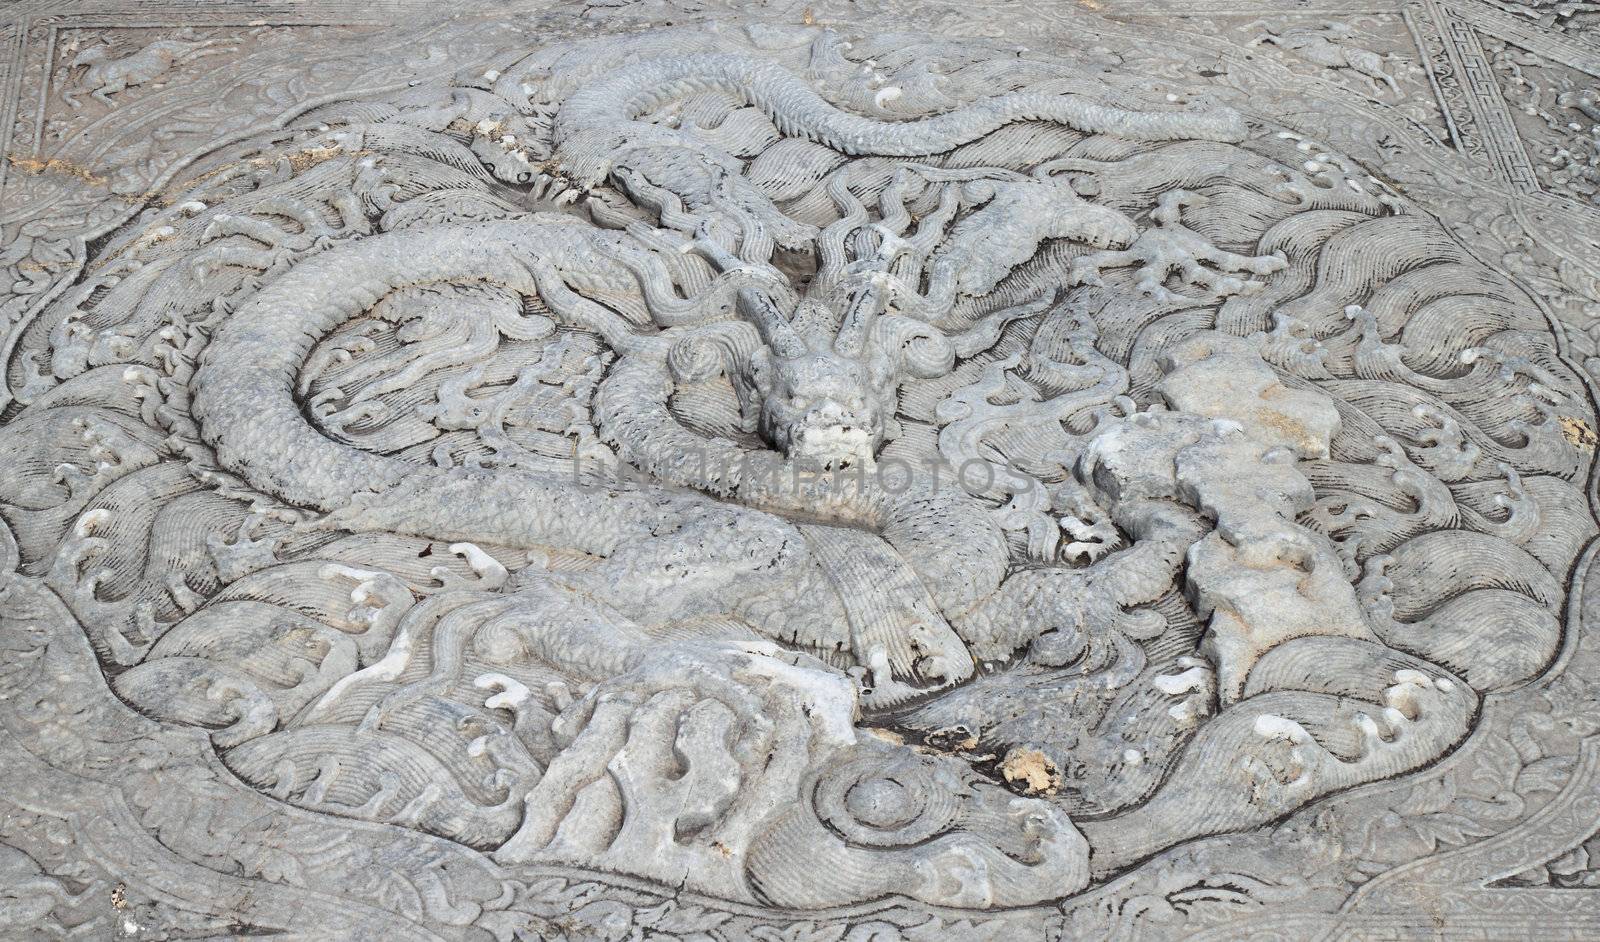 Dragon culptures on the stone pavement inside Forbidden City, Beijing